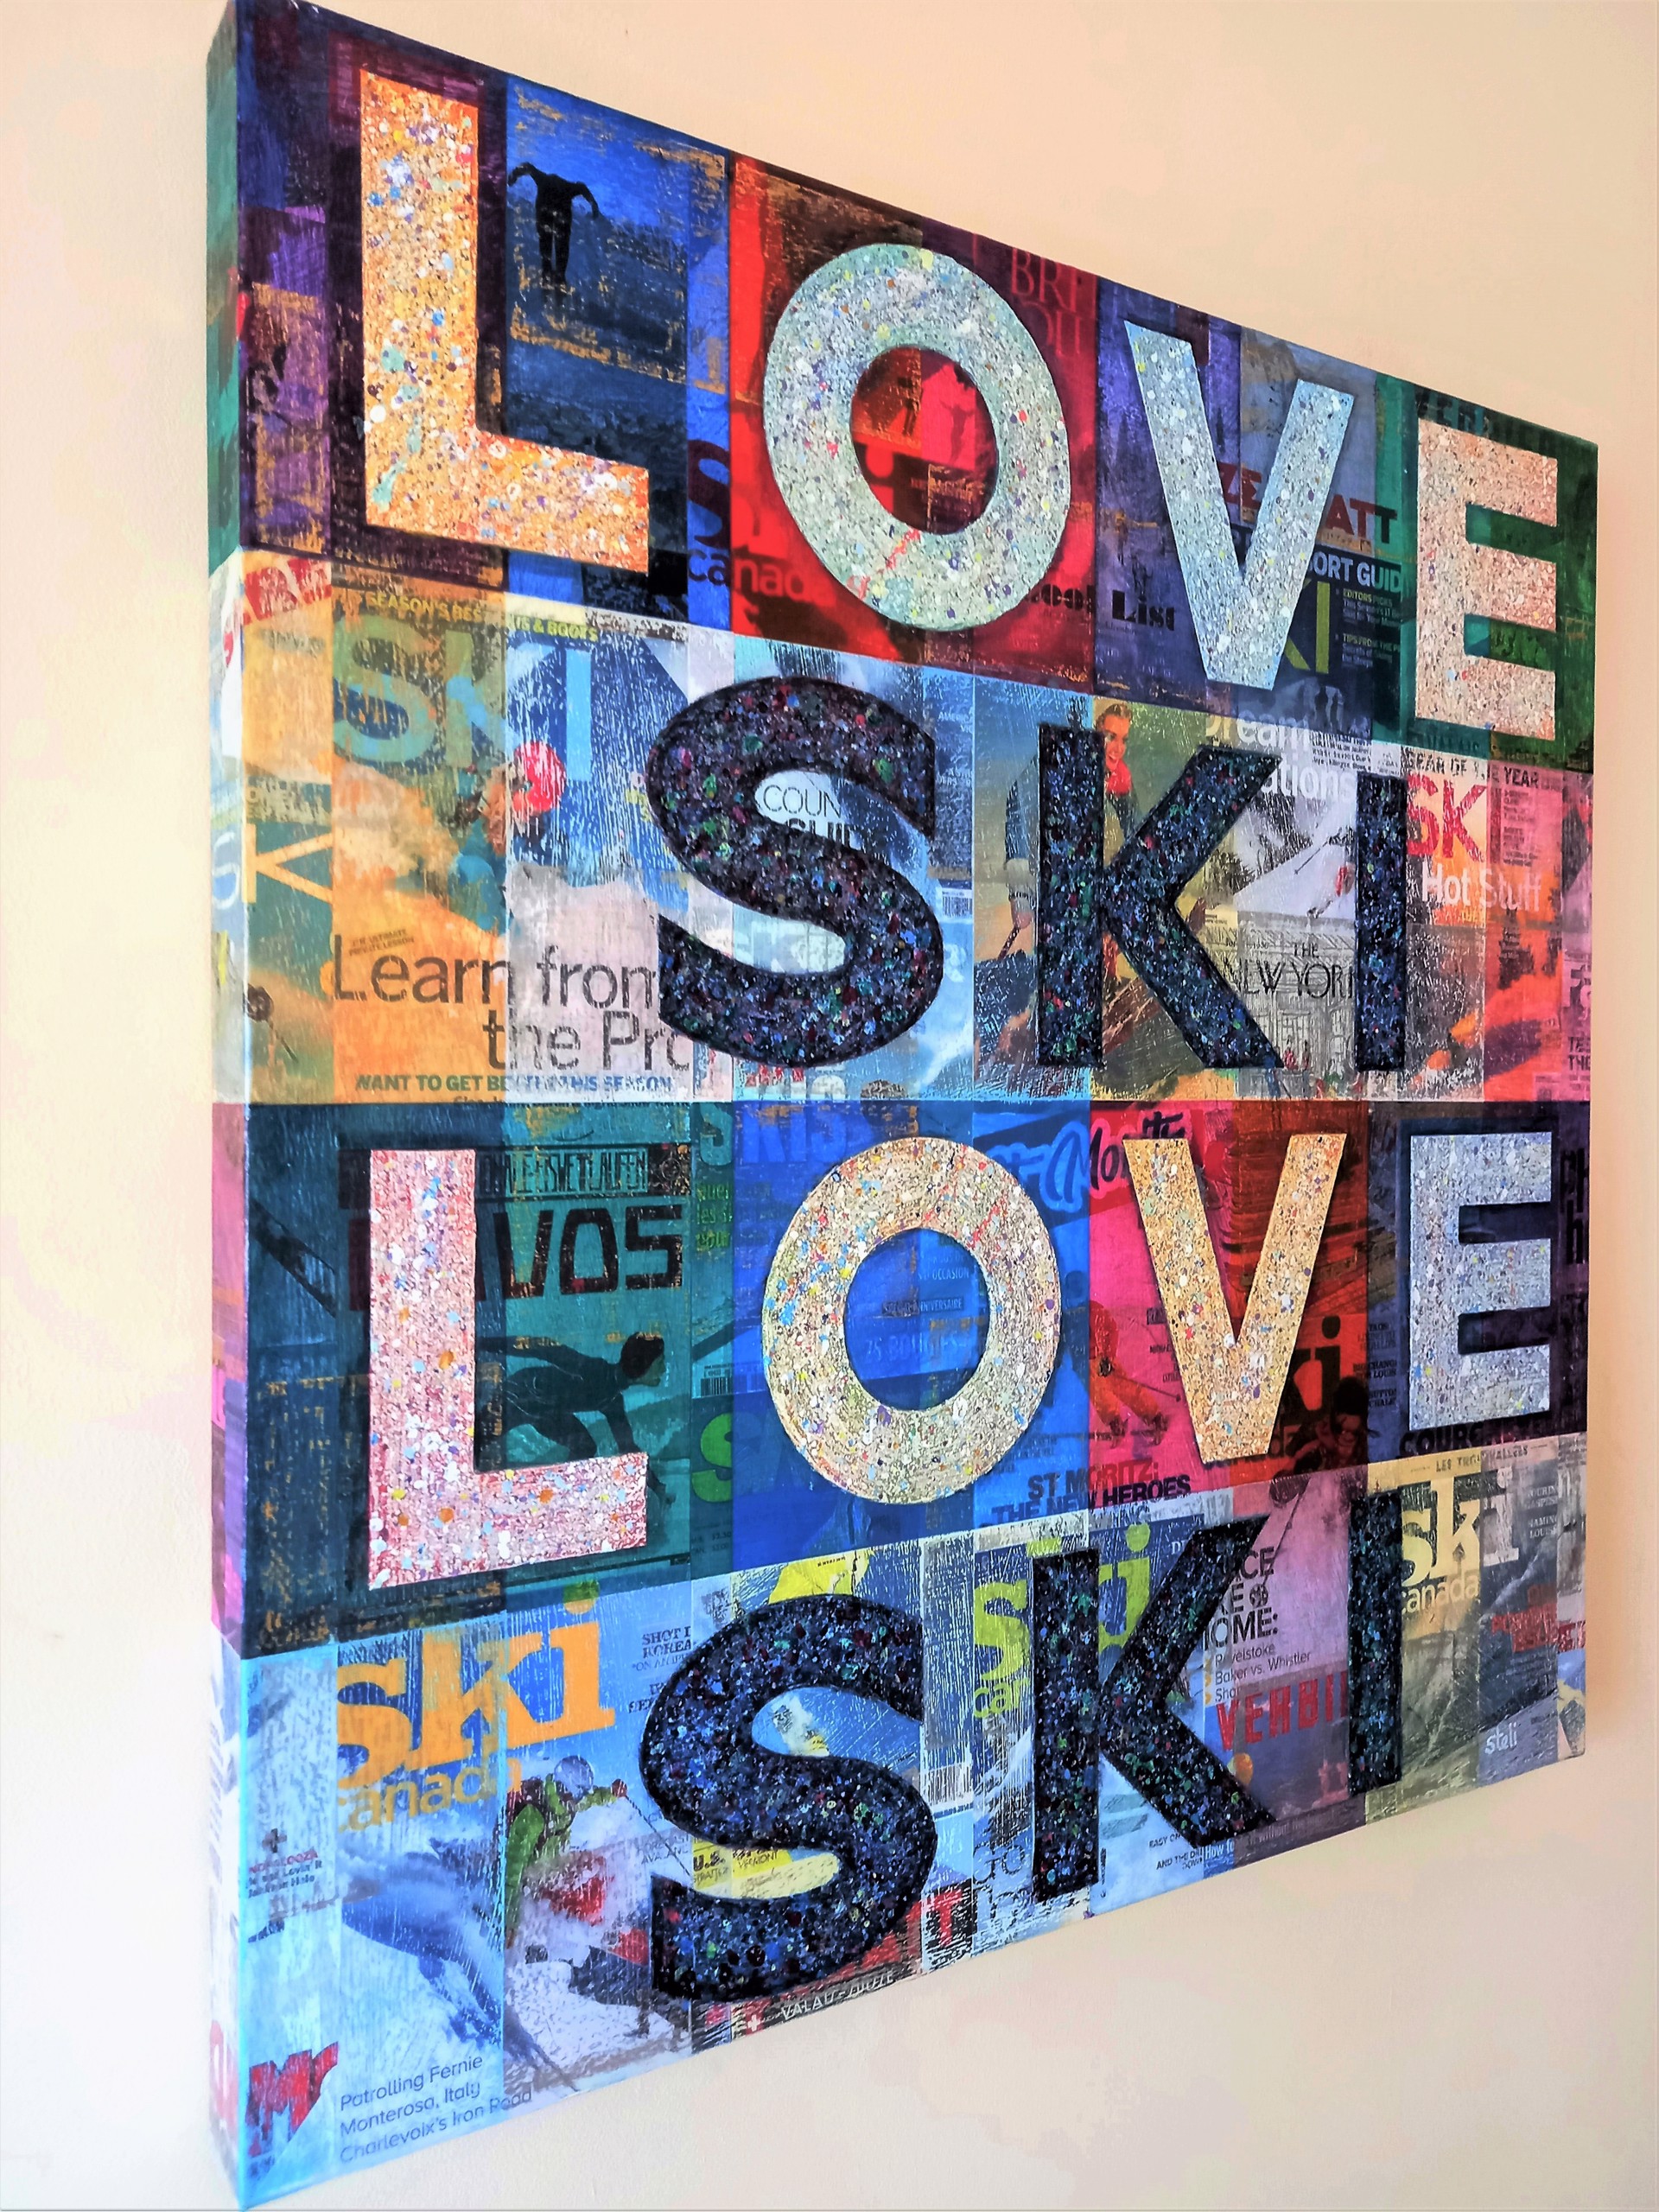 When you Love Ski 2 by Steli Christoff